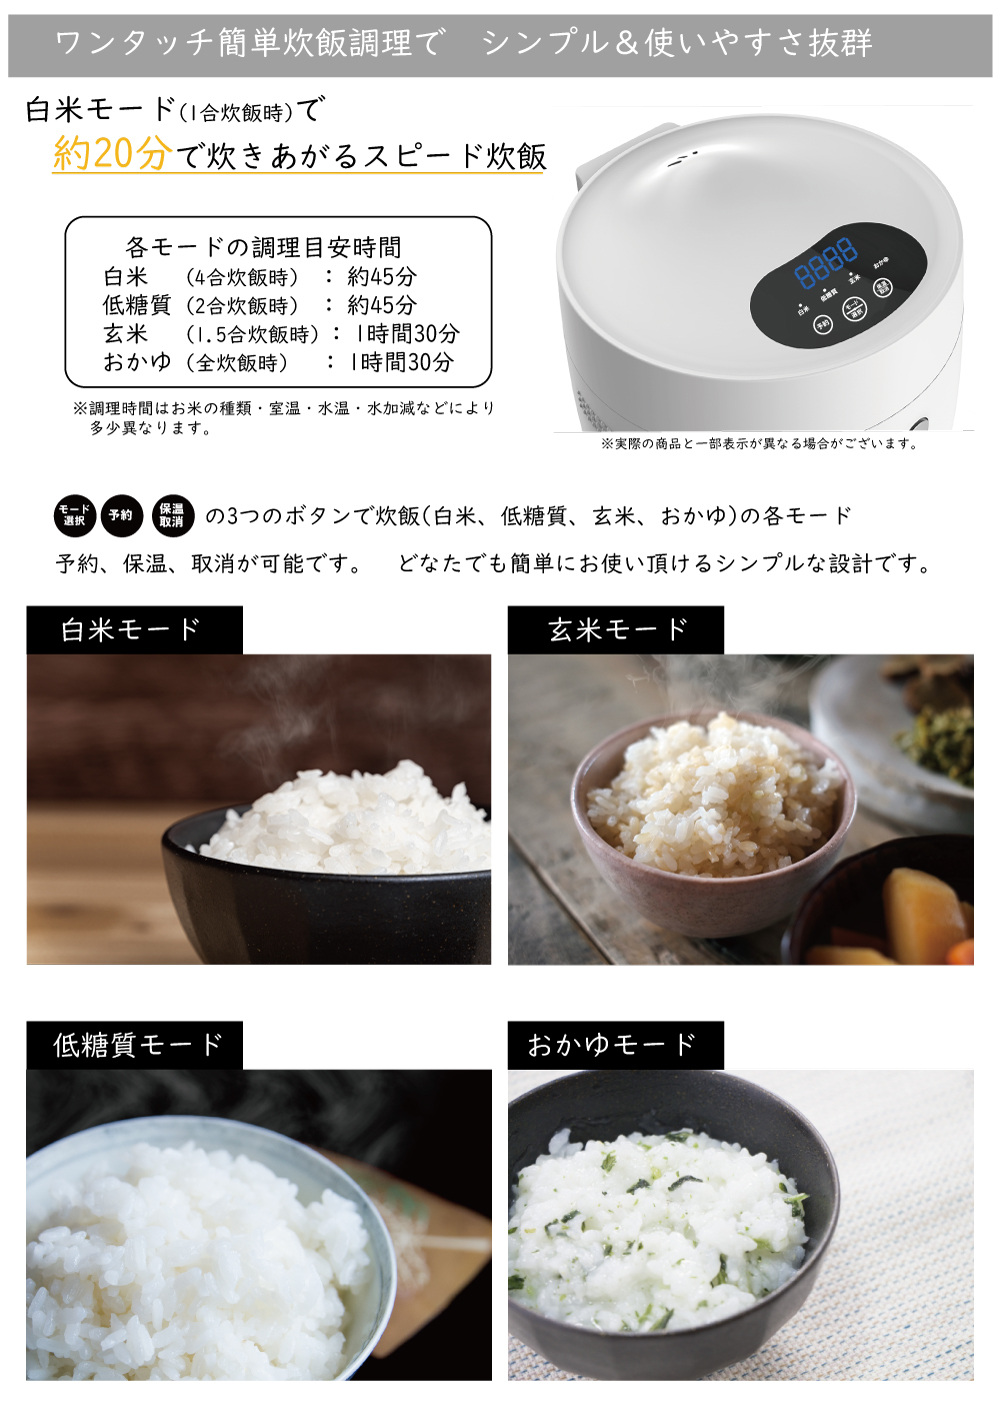 Ainx 糖質カット炊飯器 Smart Rice Cooker ブラック 品番 Ax Rc3 B septicin Com